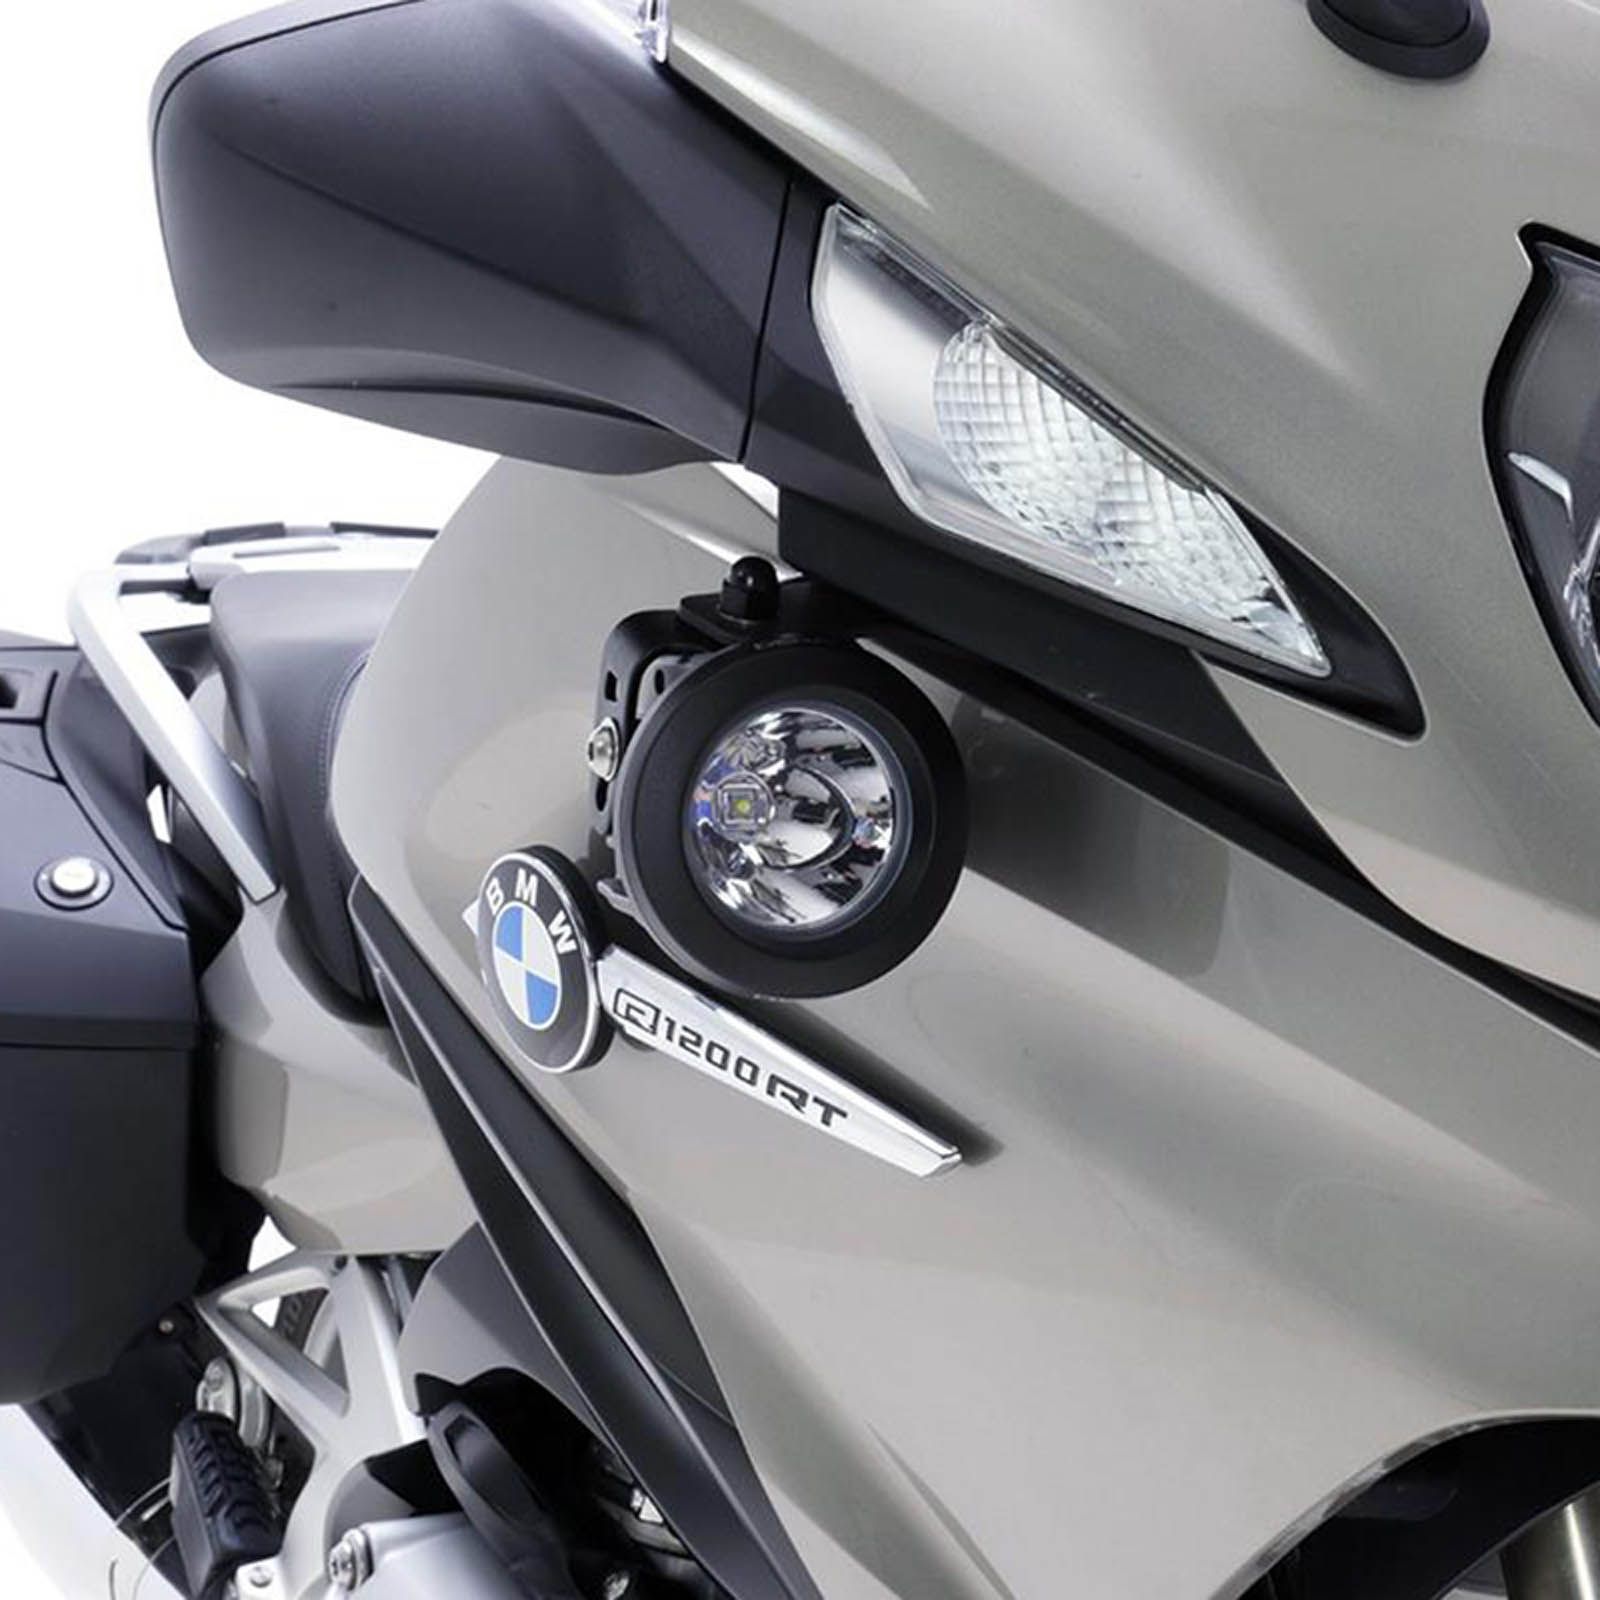 New DENALI Auxliary Light Mount Brackets For BMW R1200RT 2014- #DELAH0710700